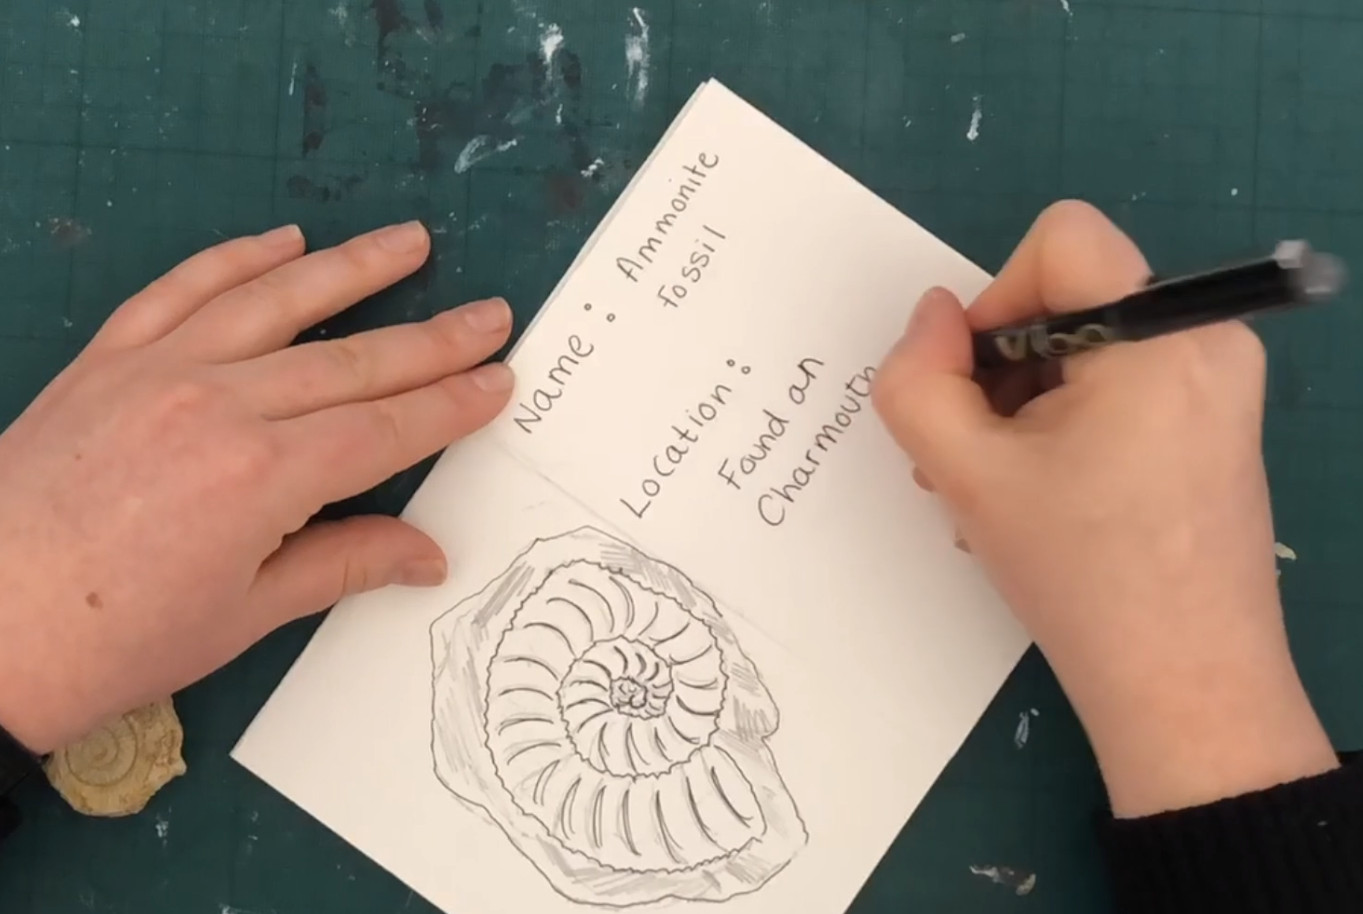 wonams hand holding a pen drawing an ammonite